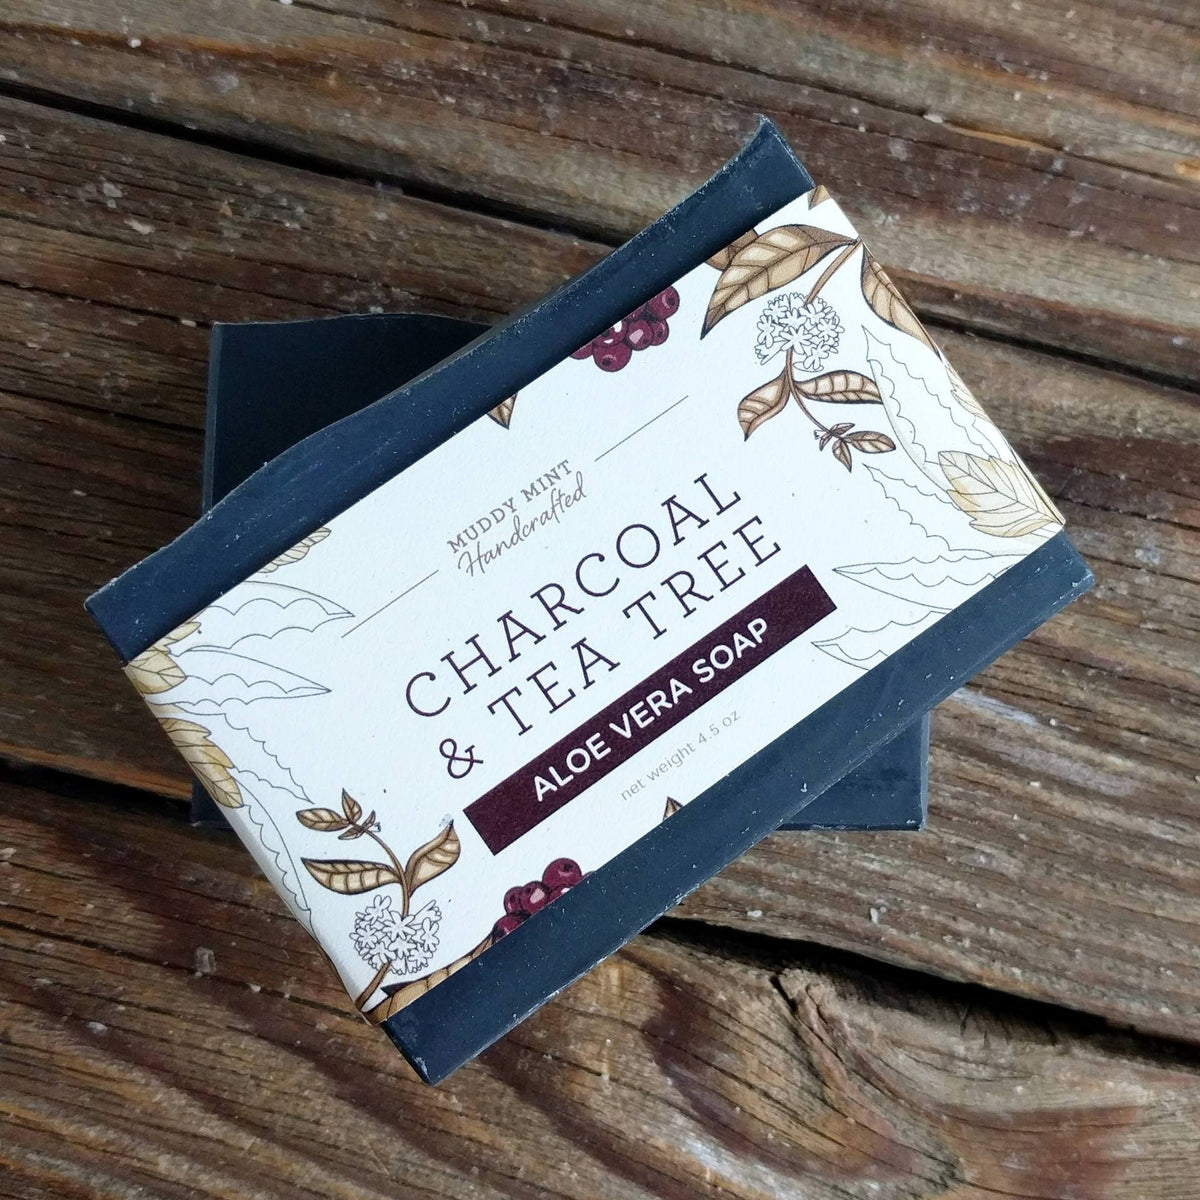 Charcoal & Tea Tree Oil Soap